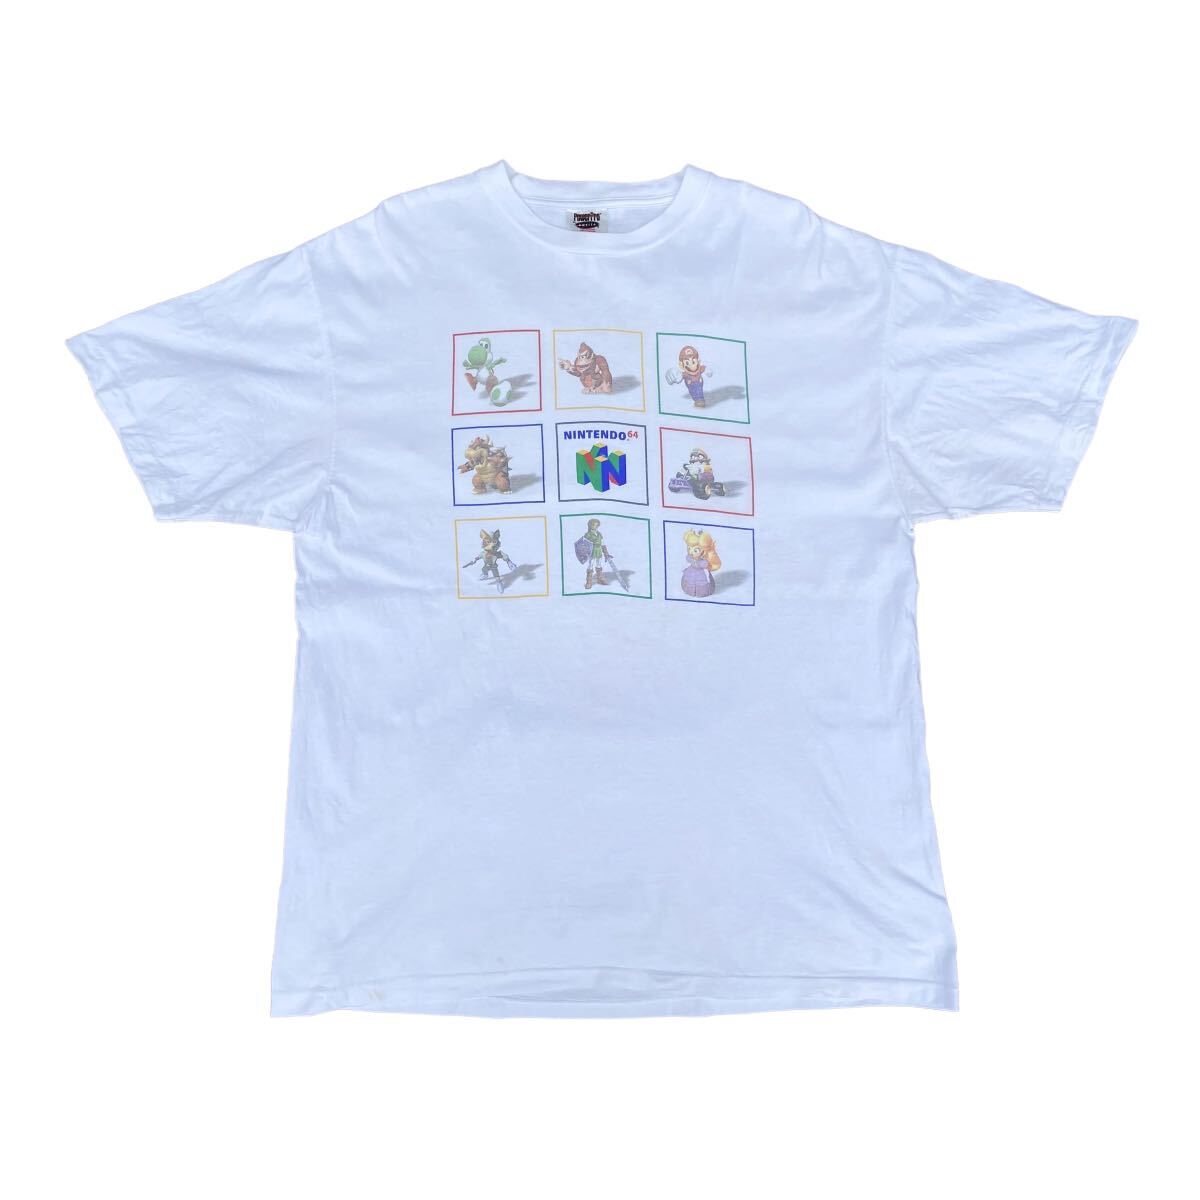 90's ONEITA Nintendo 64 任天堂 マリオ ゼルダドンキーコング アニメ ゲーム AKIRA 攻殻機動隊 古着 ビンテージ vintage Tシャツの画像1